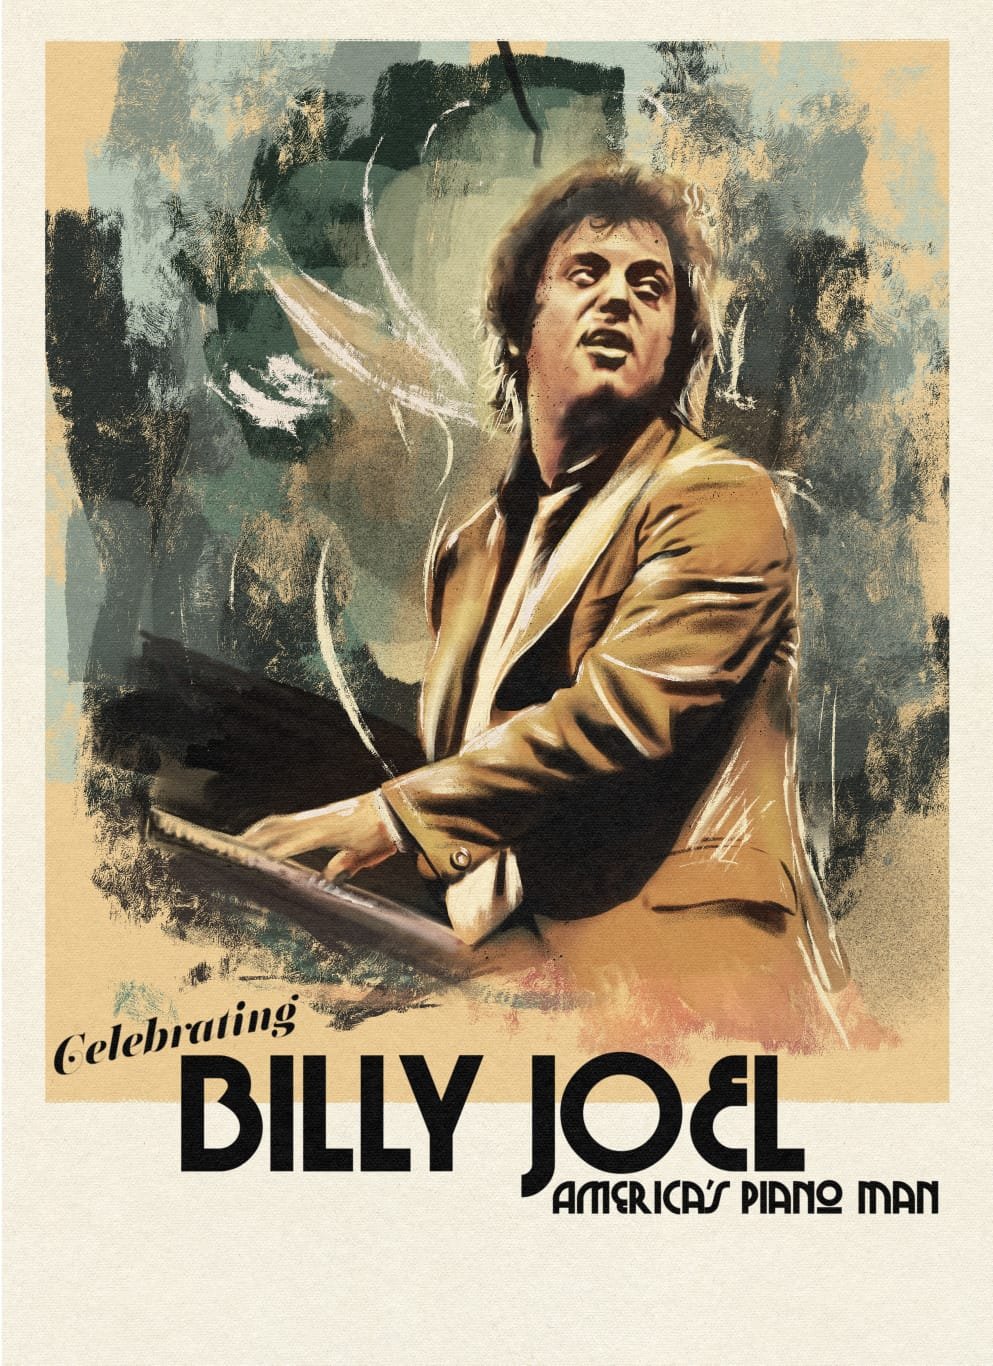 Celebrating Billy Joel - A World-Class Tribute to America's Piano Man